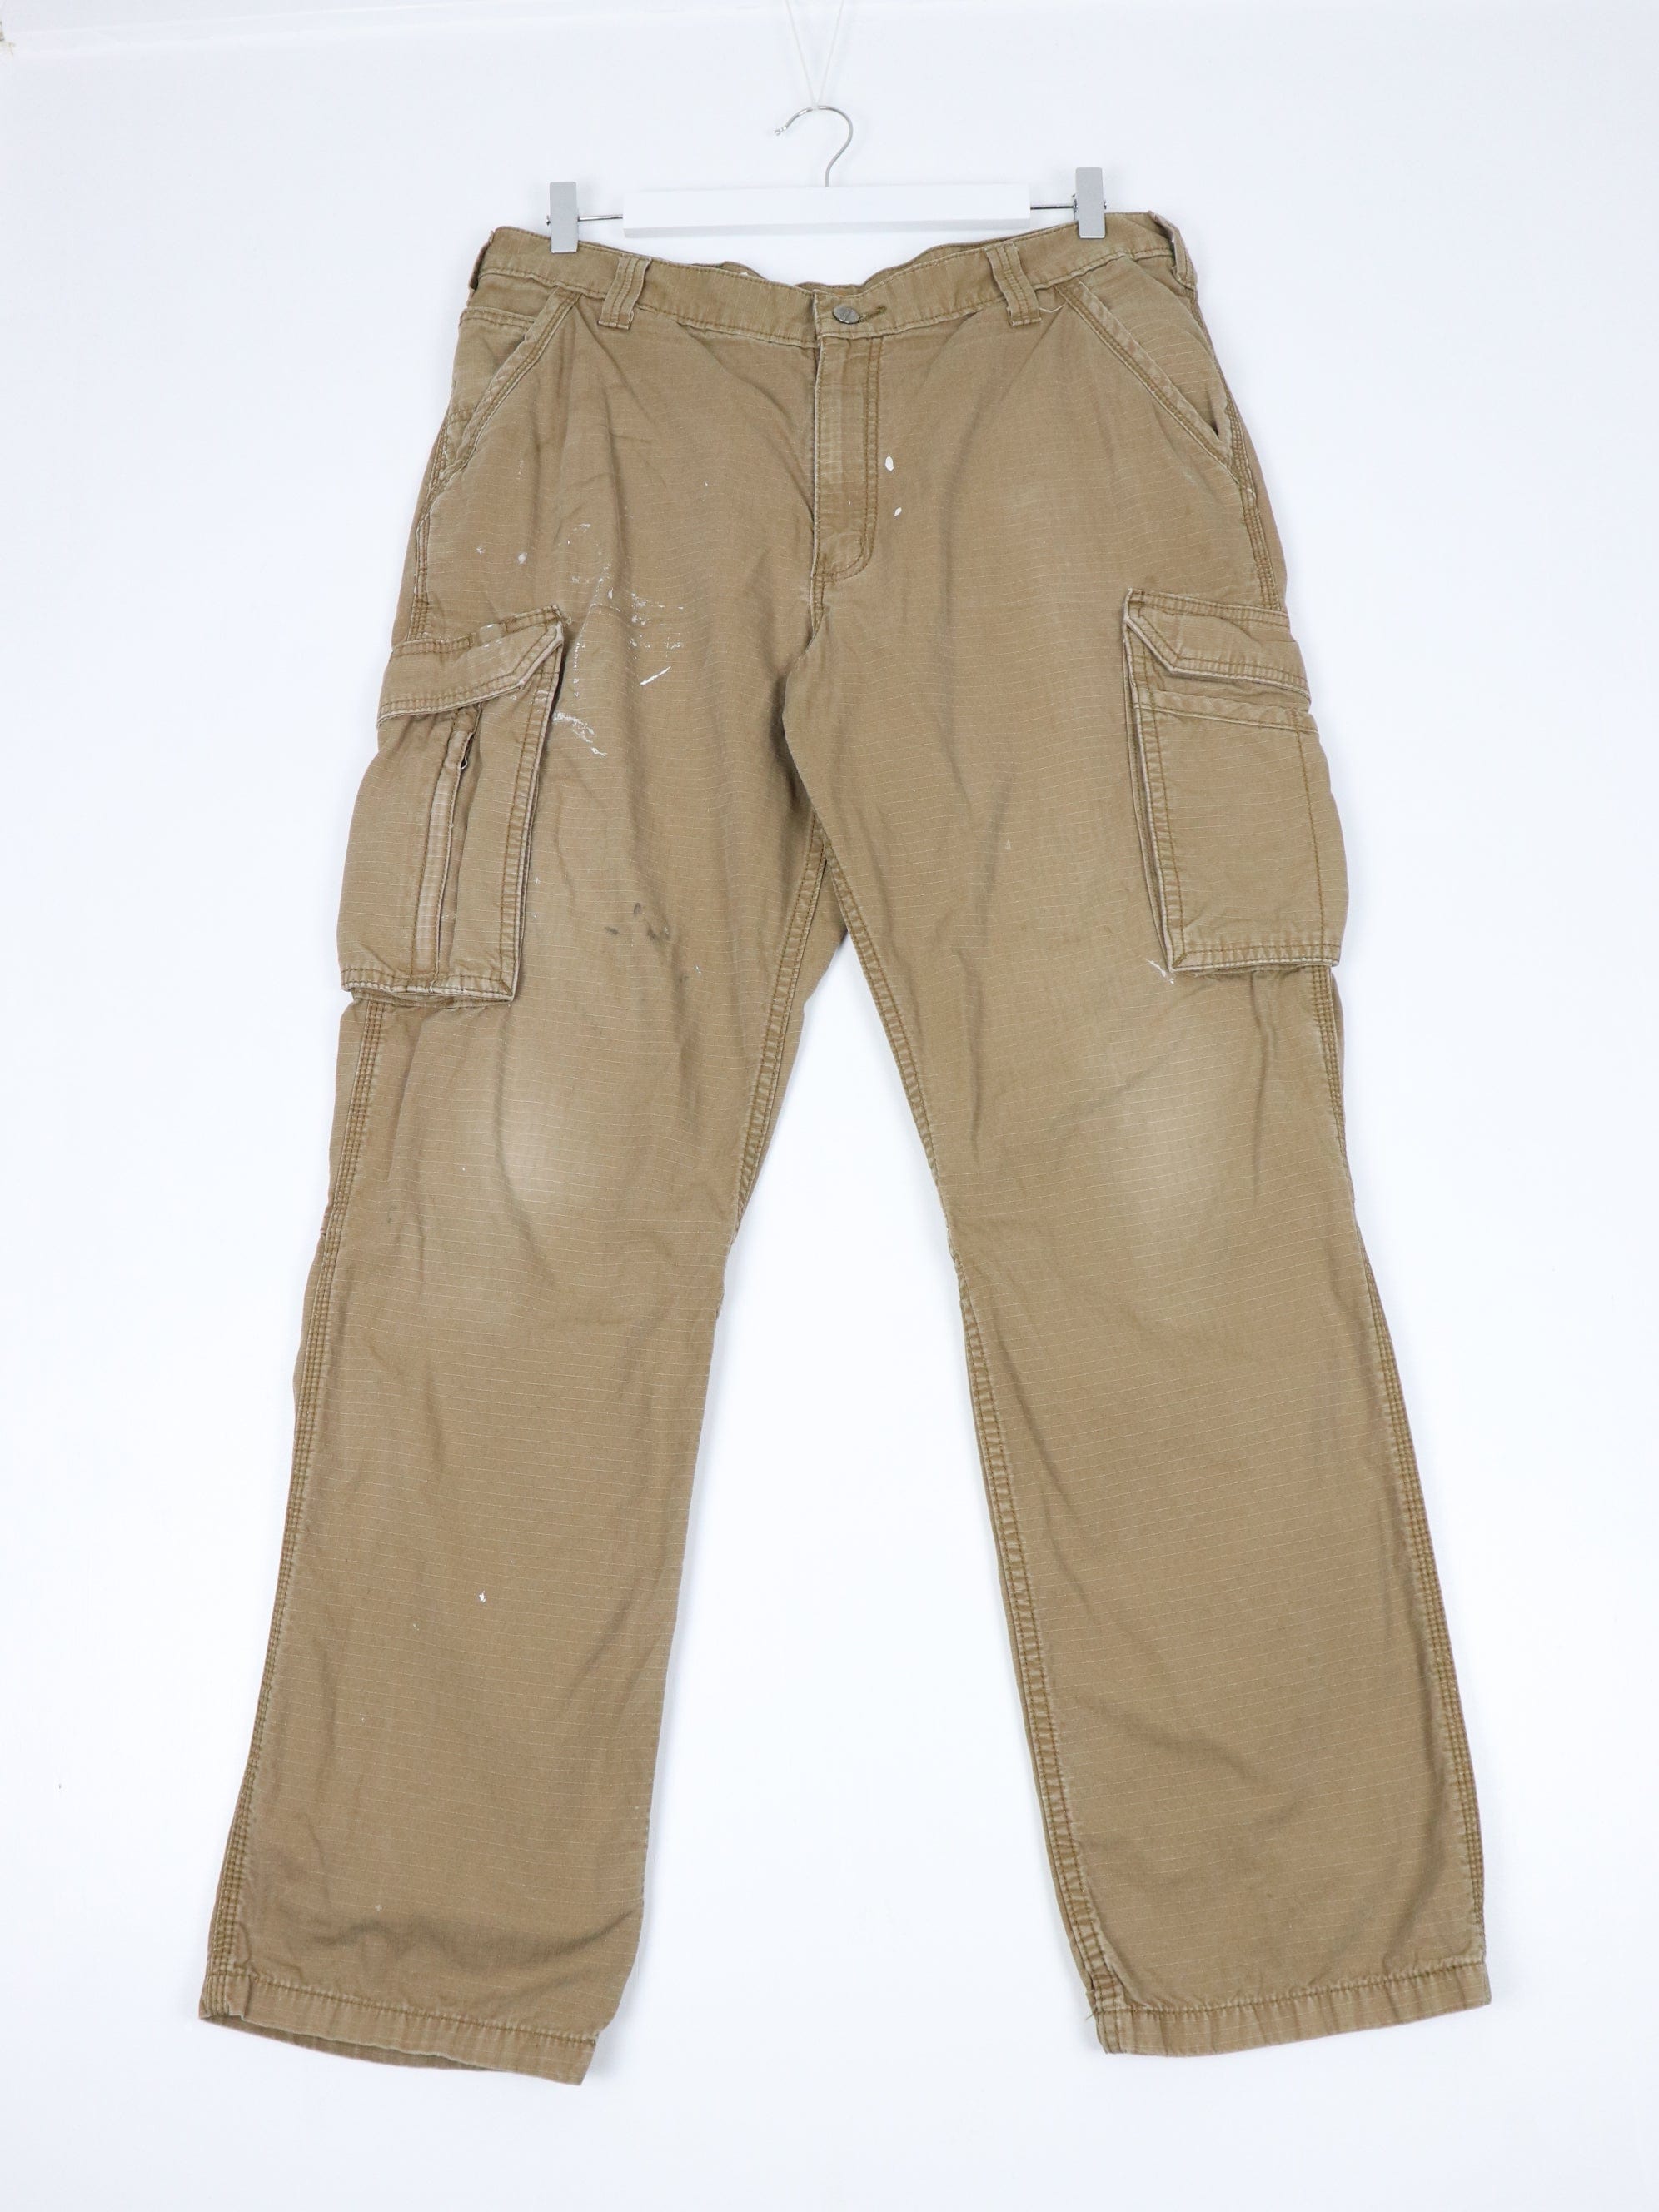 Carhartt Pants Mens 36 x 32 Brown Cargo Work Wear Carpenters